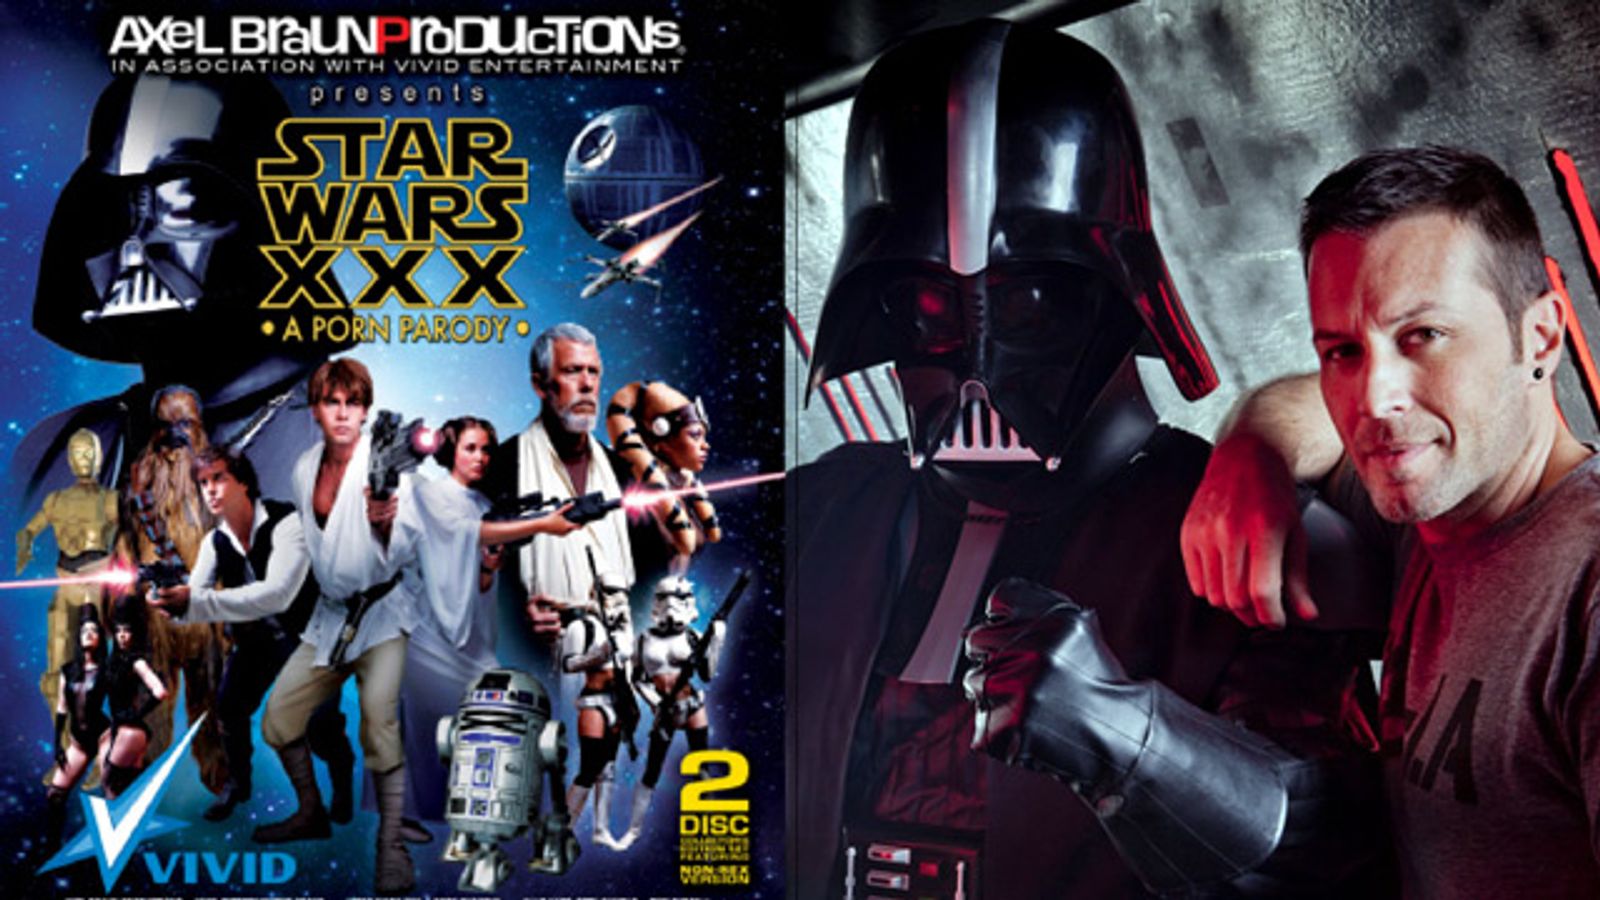 deepak premkumar recommends Star Wars Xxx 2